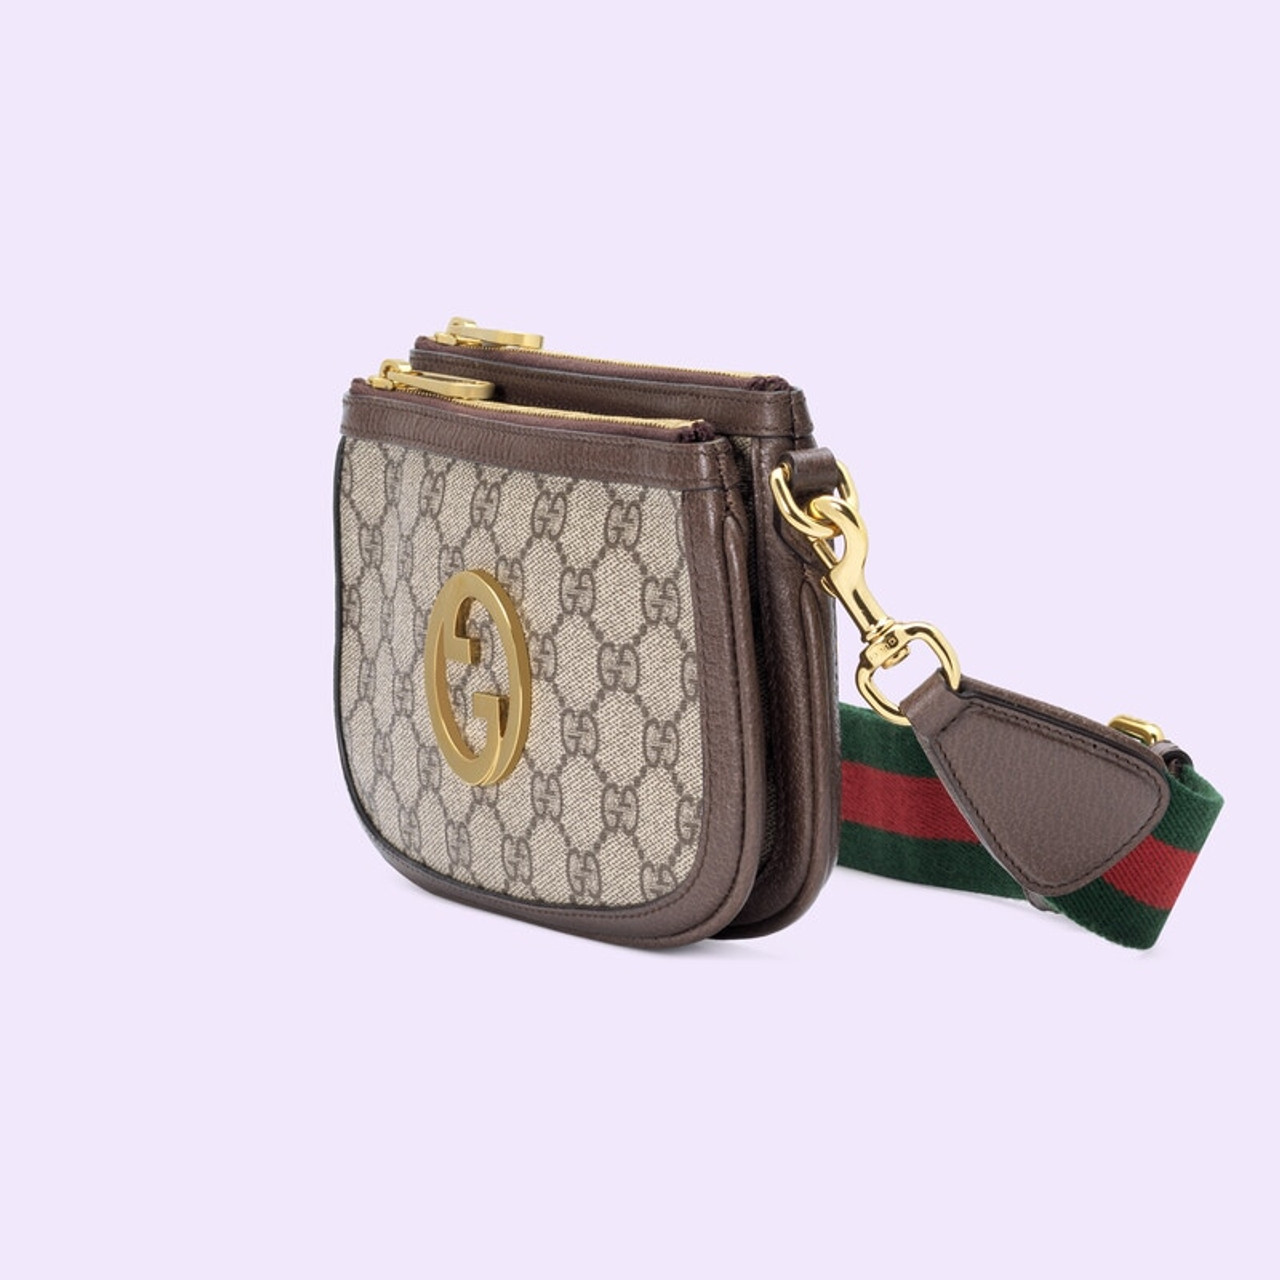 Gucci Dionysus Gg Small Rectangular Bag Gg Canvas - Beige | Editorialist